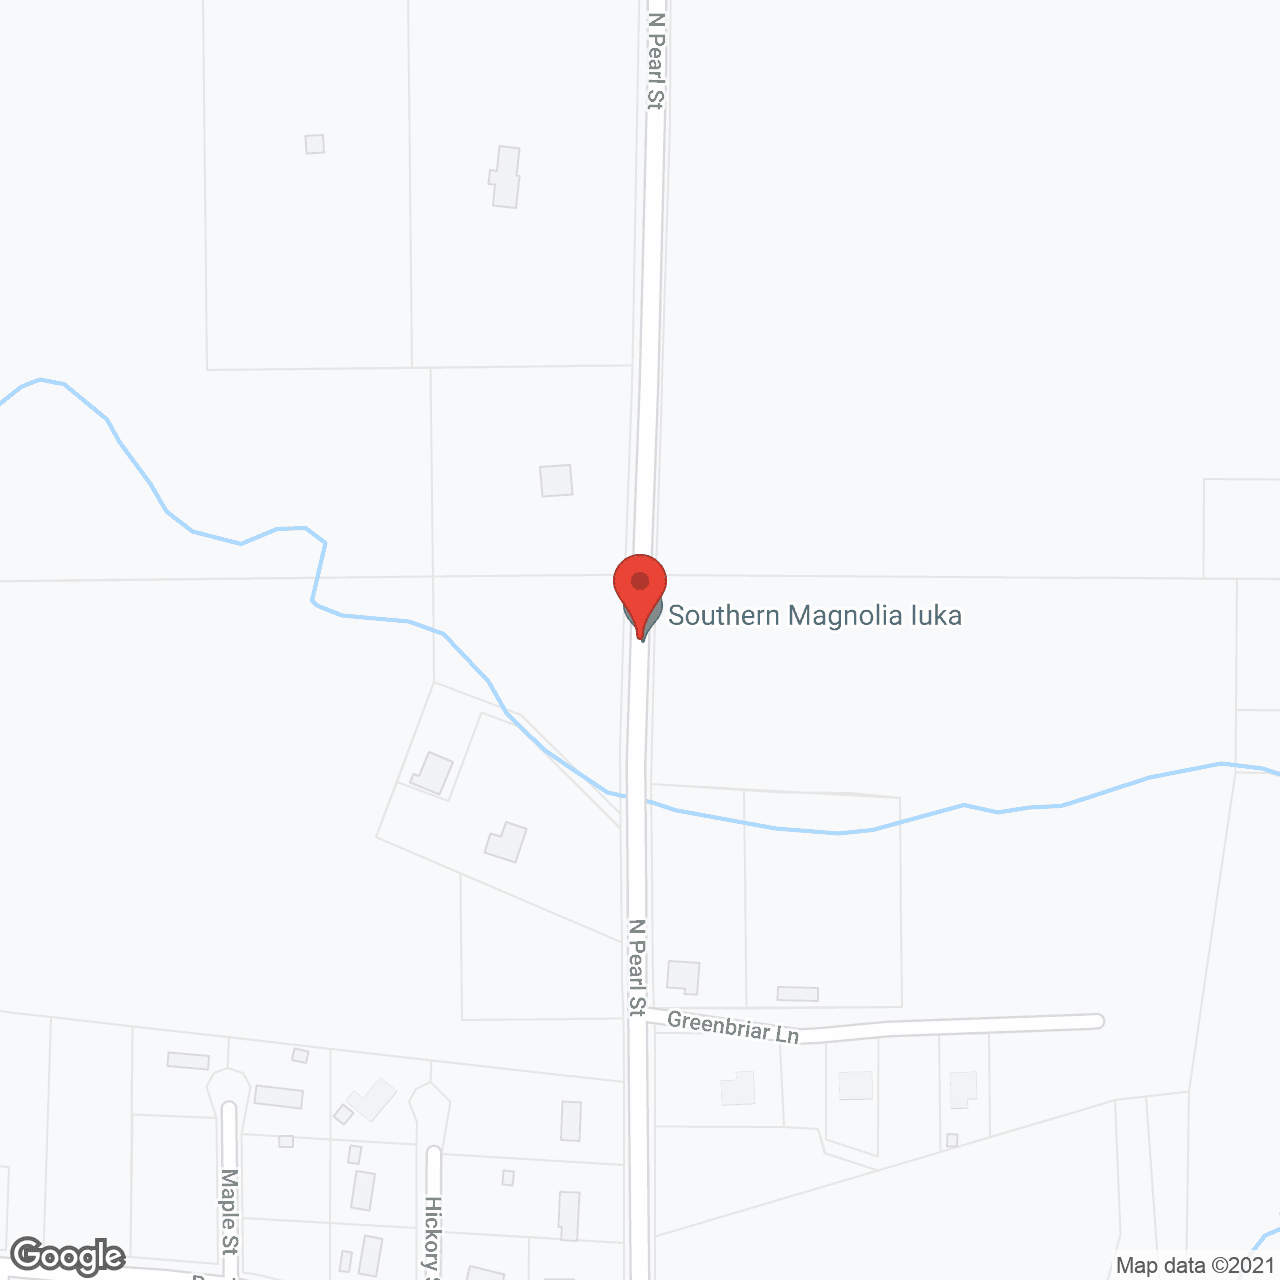 Southern Magnolia Iuka in google map